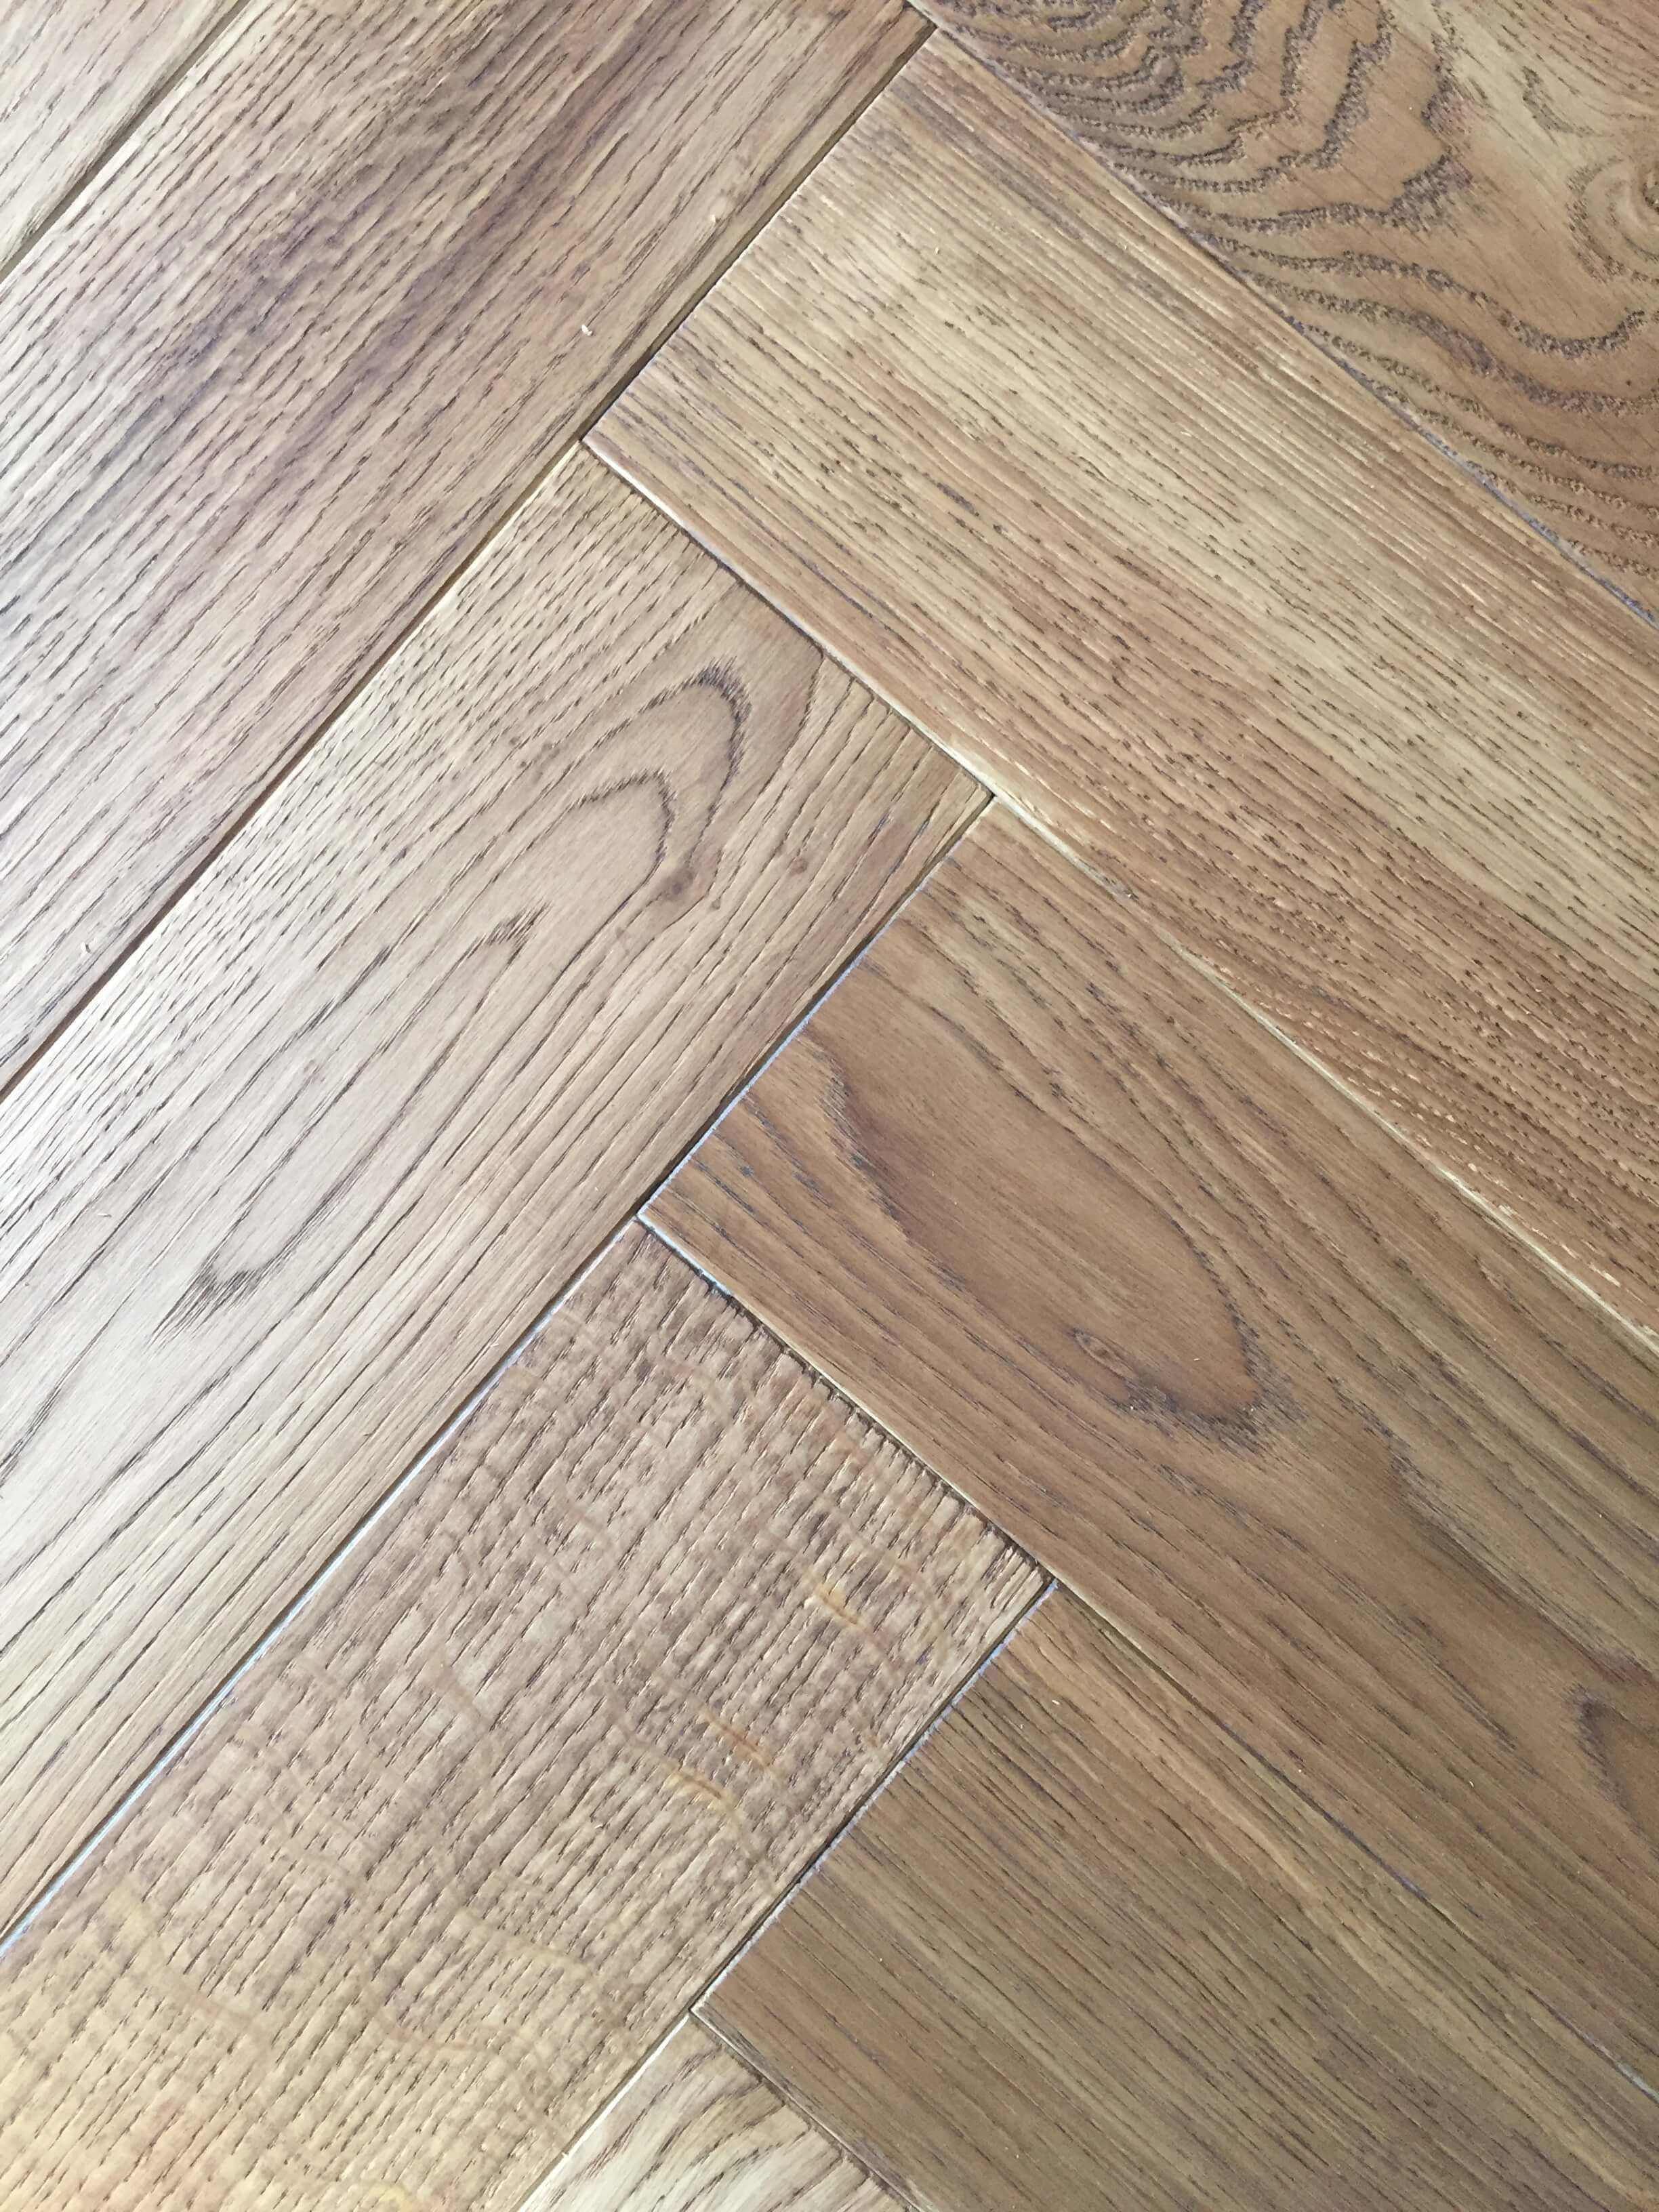 hardwood flooring nyc of teak floor tiles best of deck tiles wood best products teatro within teak floor tiles beautiful ceramic tile wood floor walnut engineered floor bined with ceramic